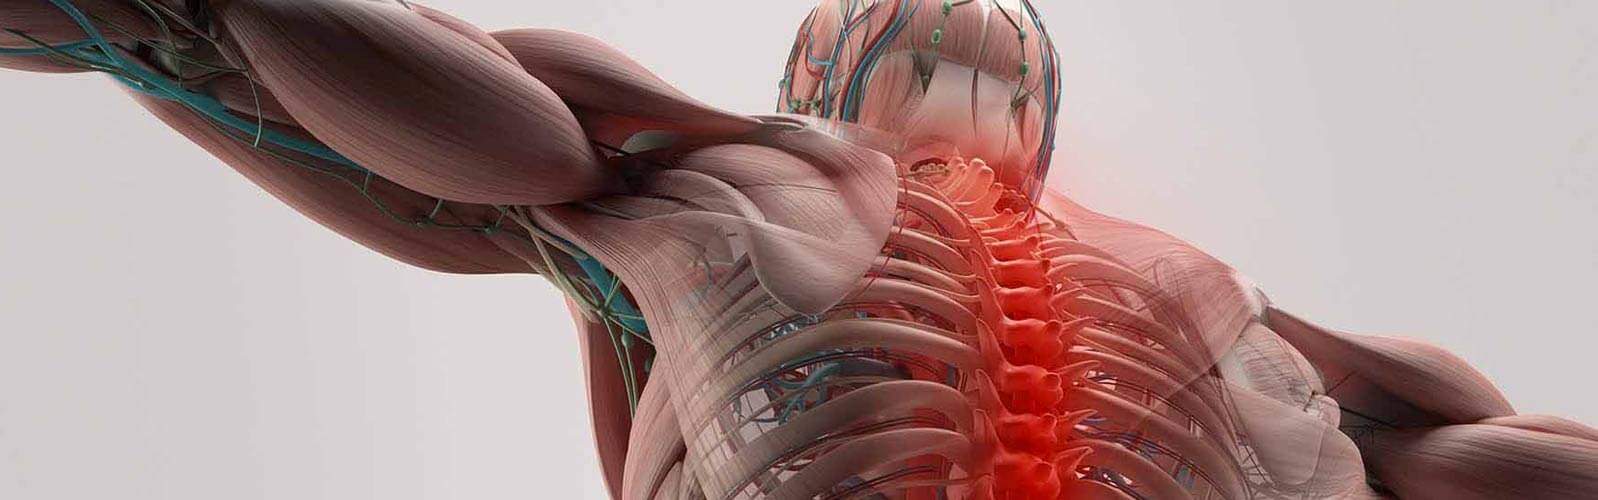 anova institute for regenerative medicine - spinal cord injury